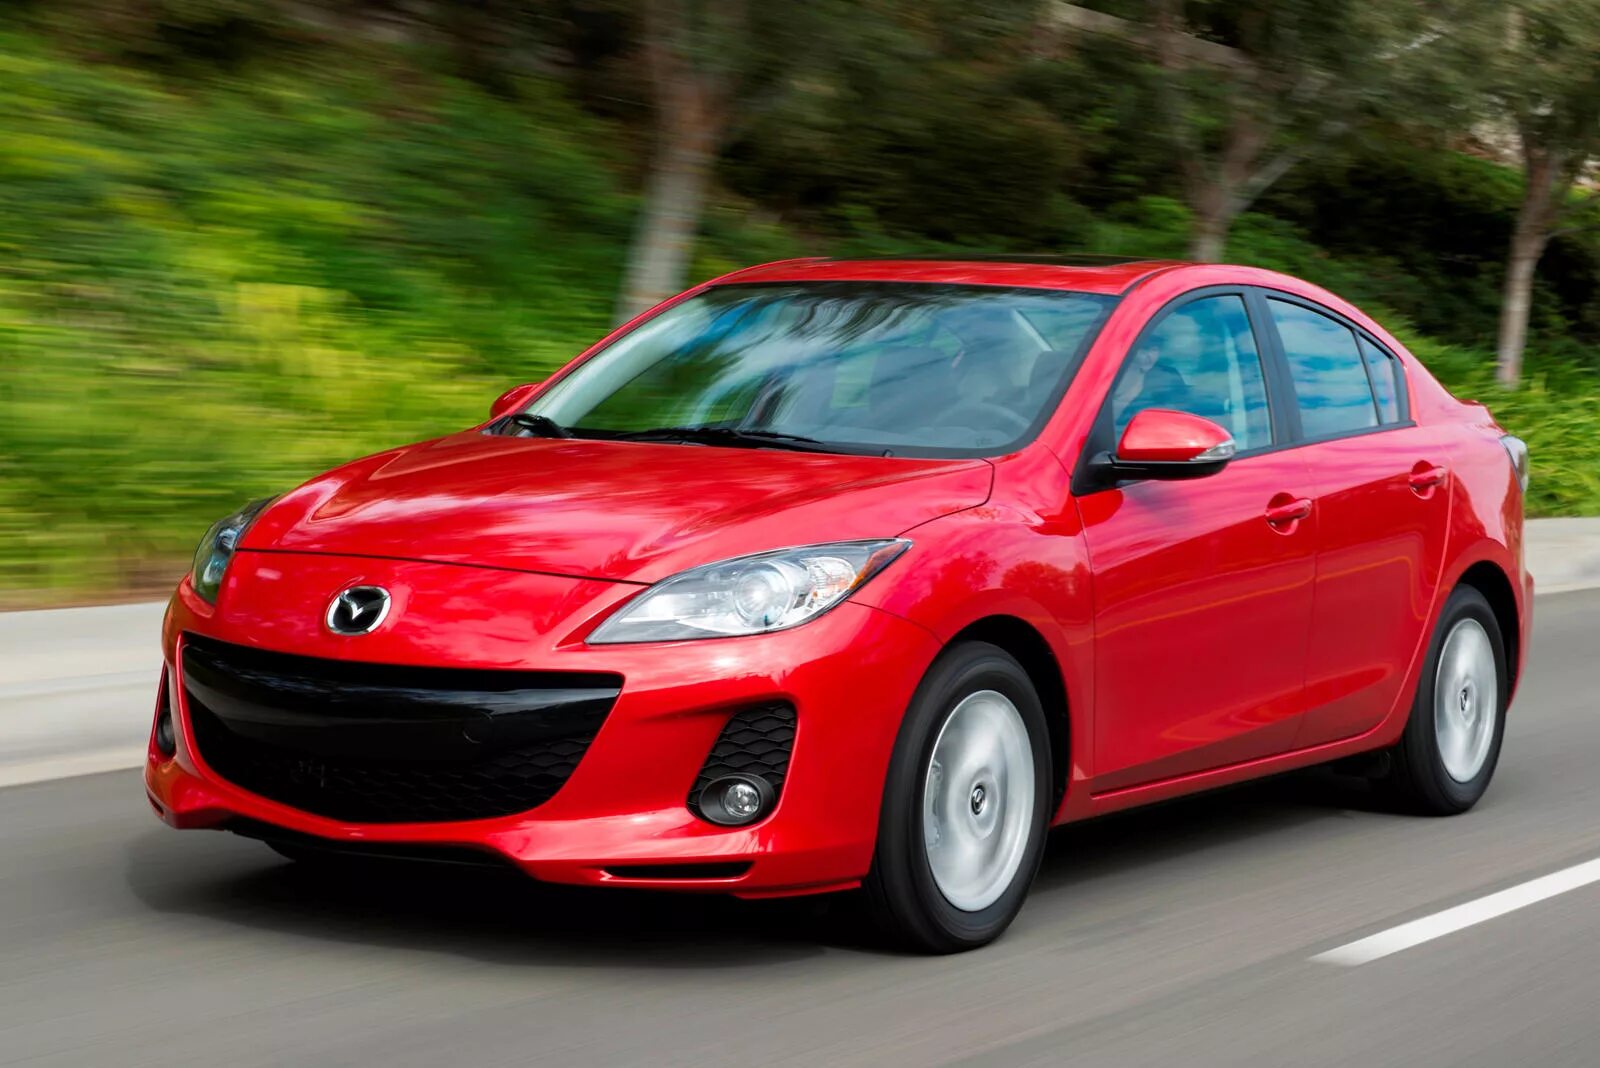 Mazda 3 2013. Мазда 3 седан. Mazda 3 2013 седан. Мазда 3 седан 2013. Мазда 3 6 года